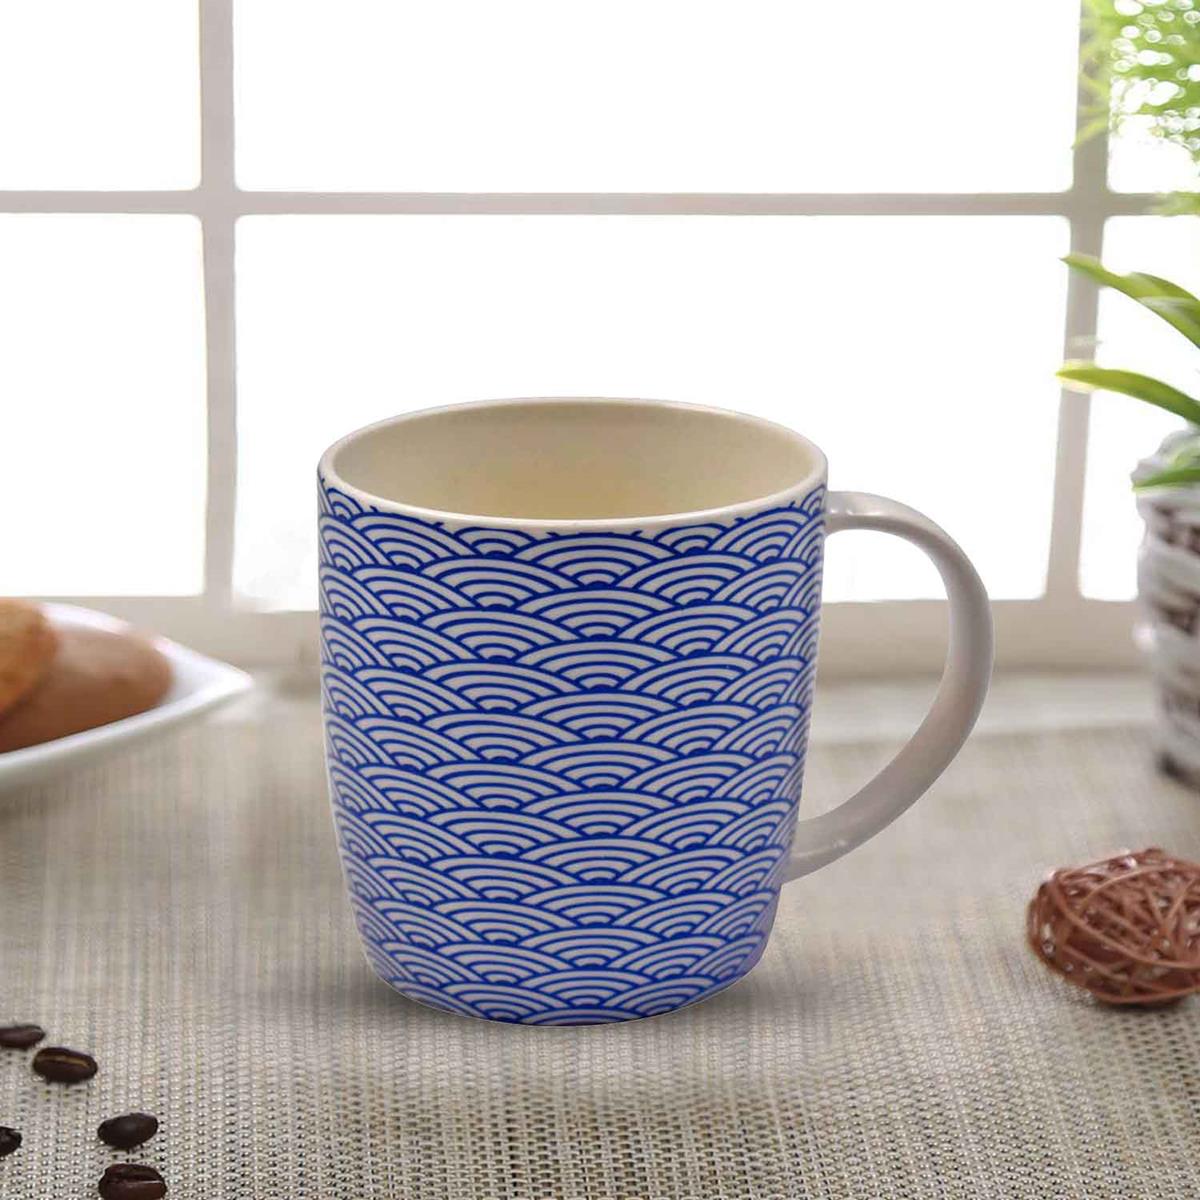 Ceramic Coffee or Tea Mug with handle - 325ml (3525-B)